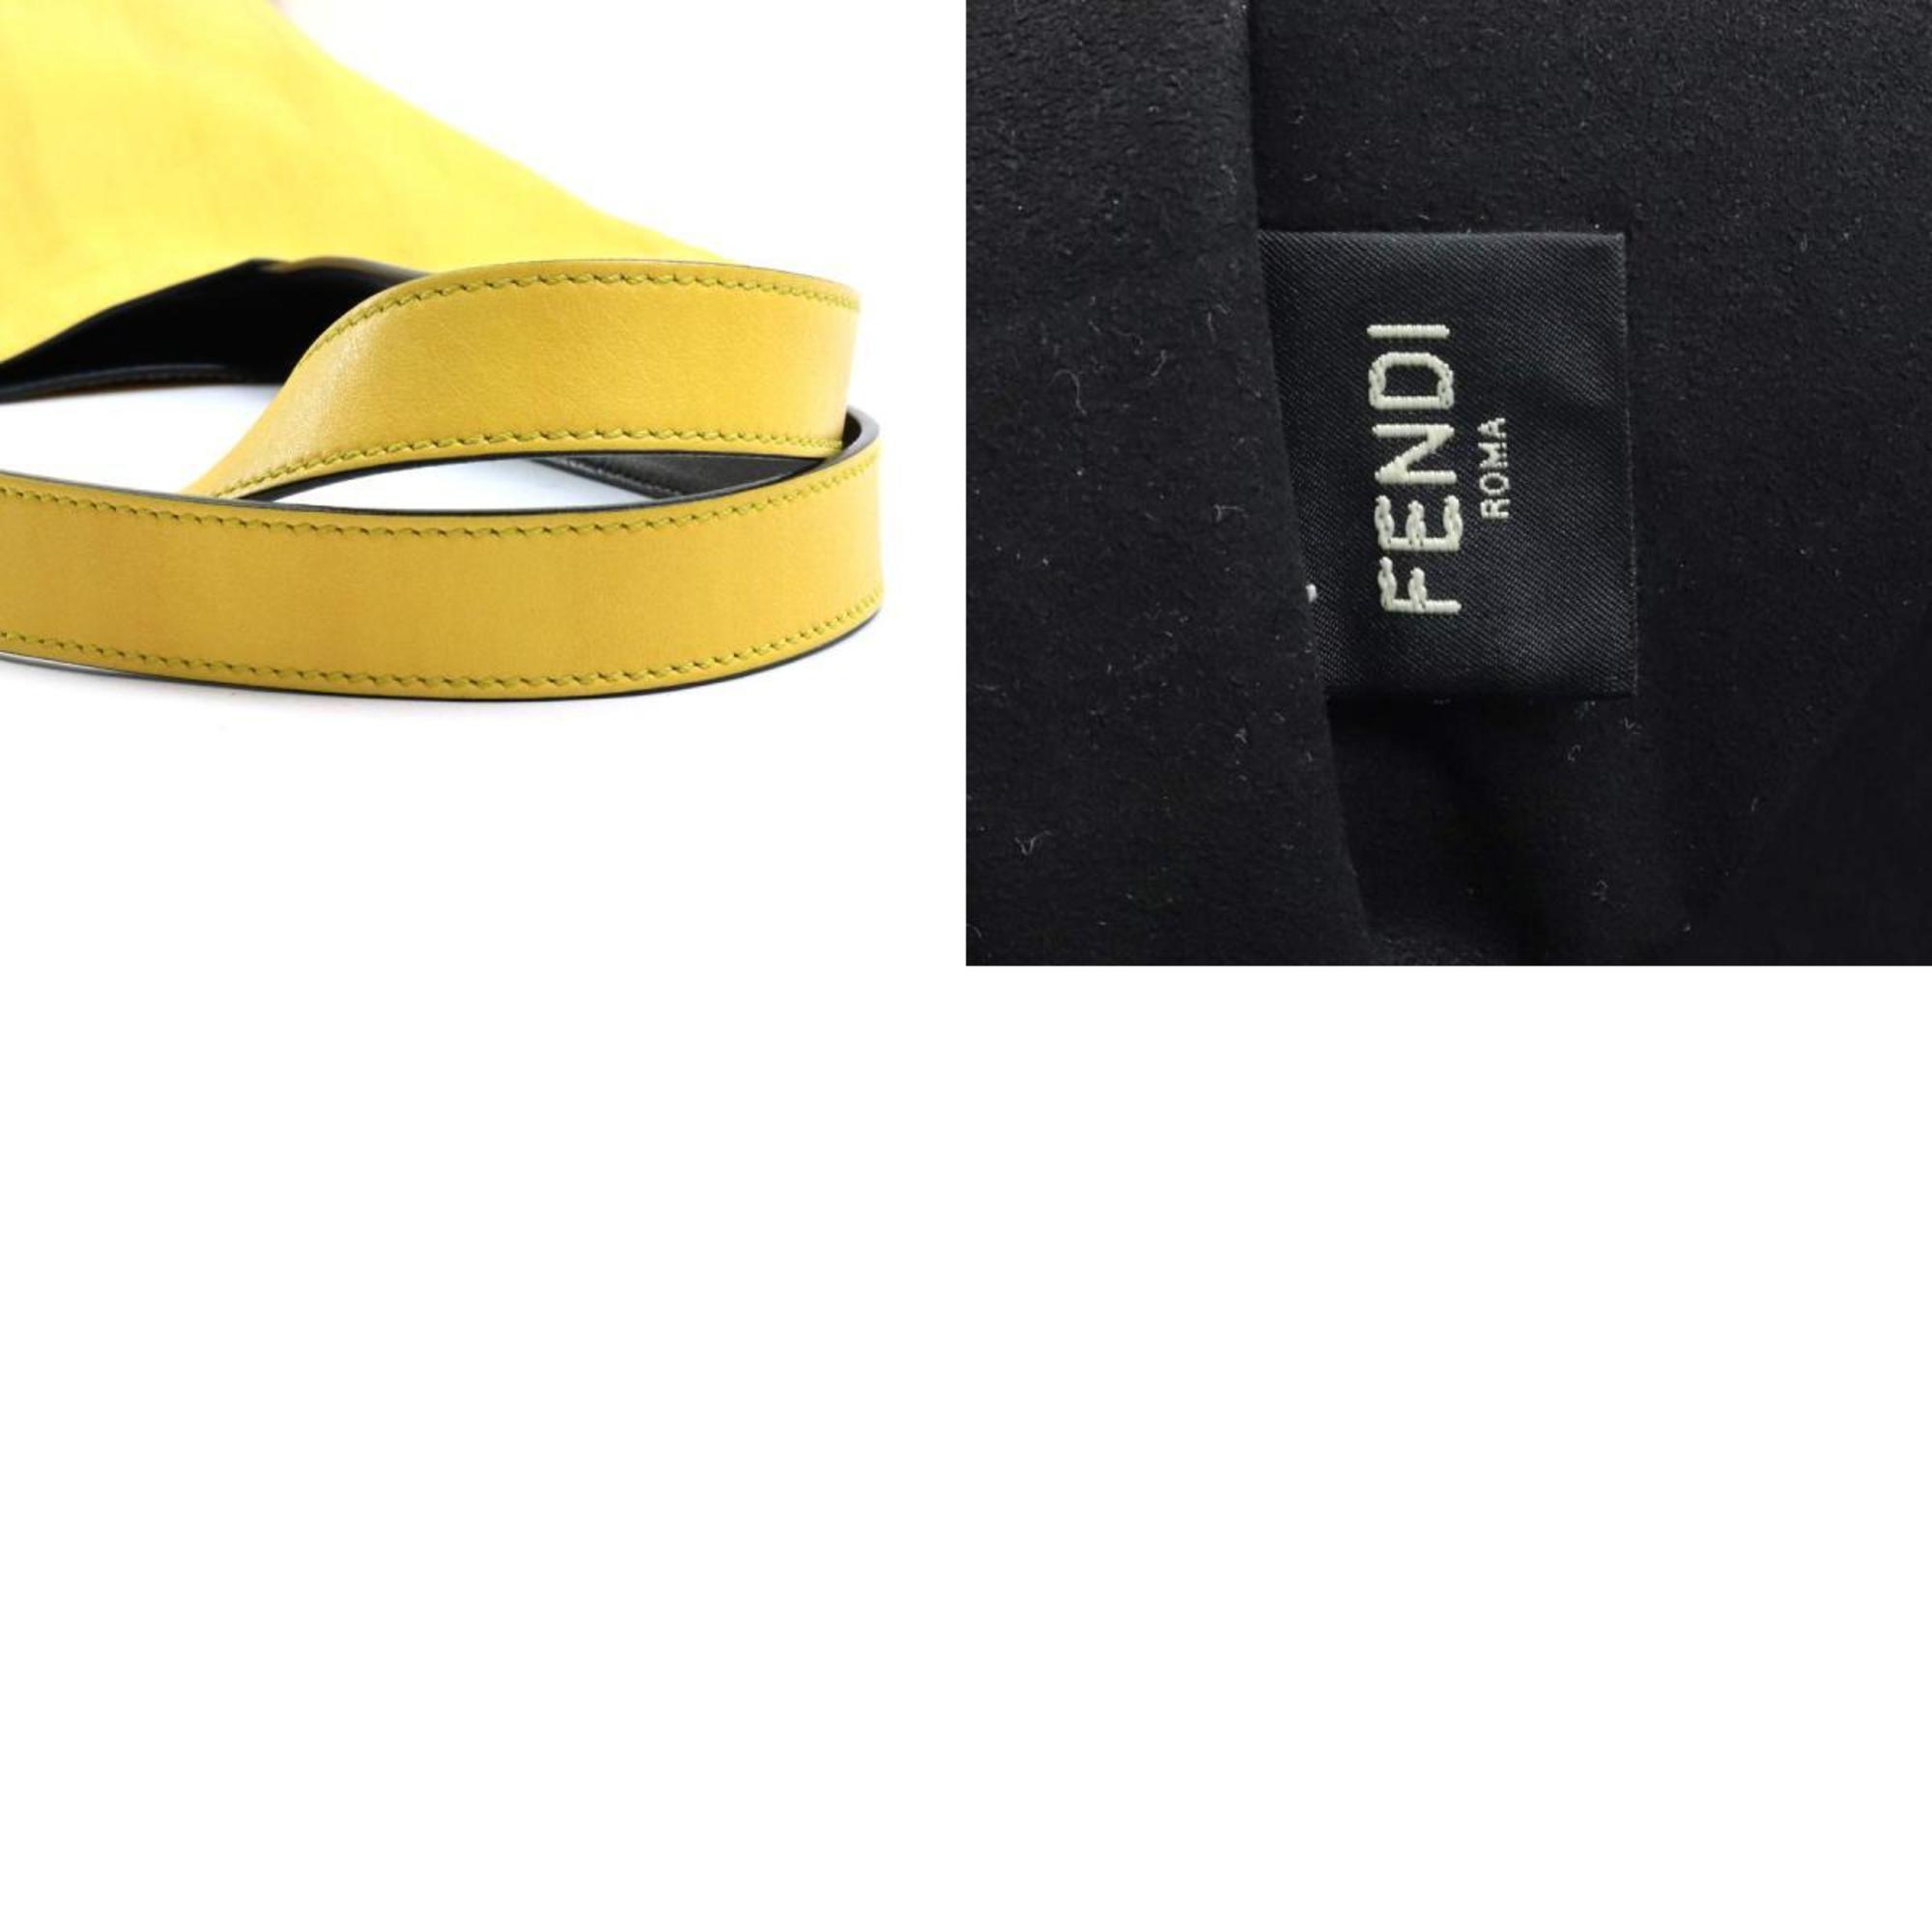 FENDI Shoulder bag tote leather yellow x black men's 7VA538-ADP6